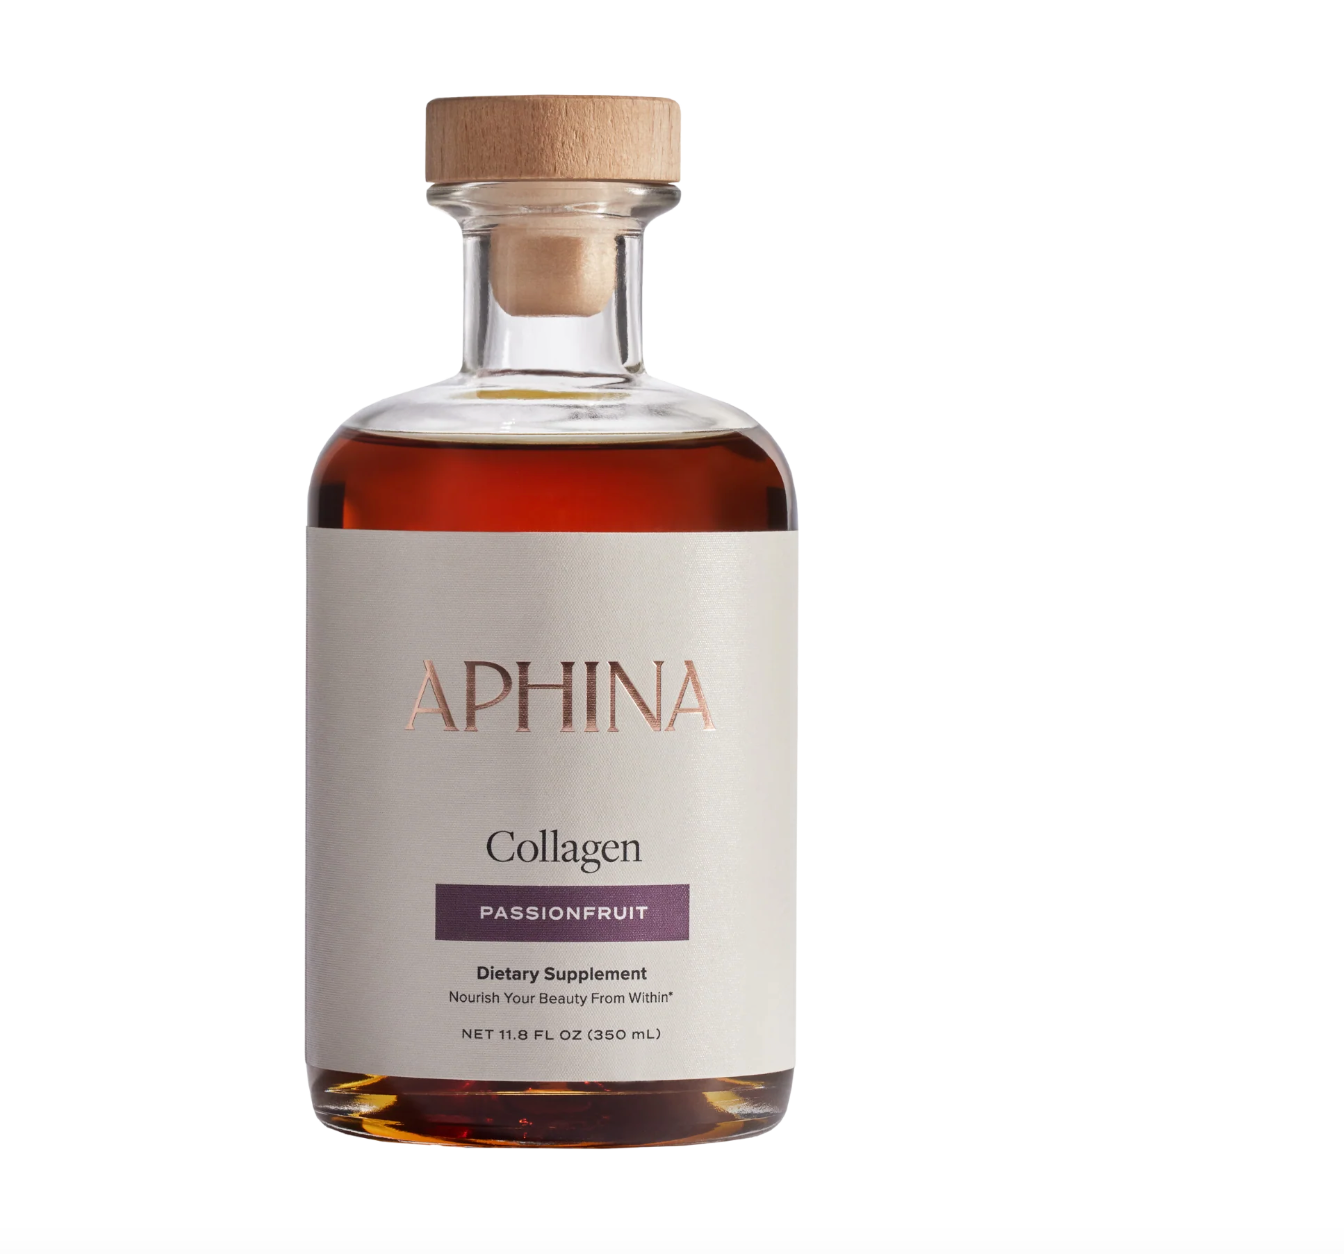 Aphina Passionfruit Collagen